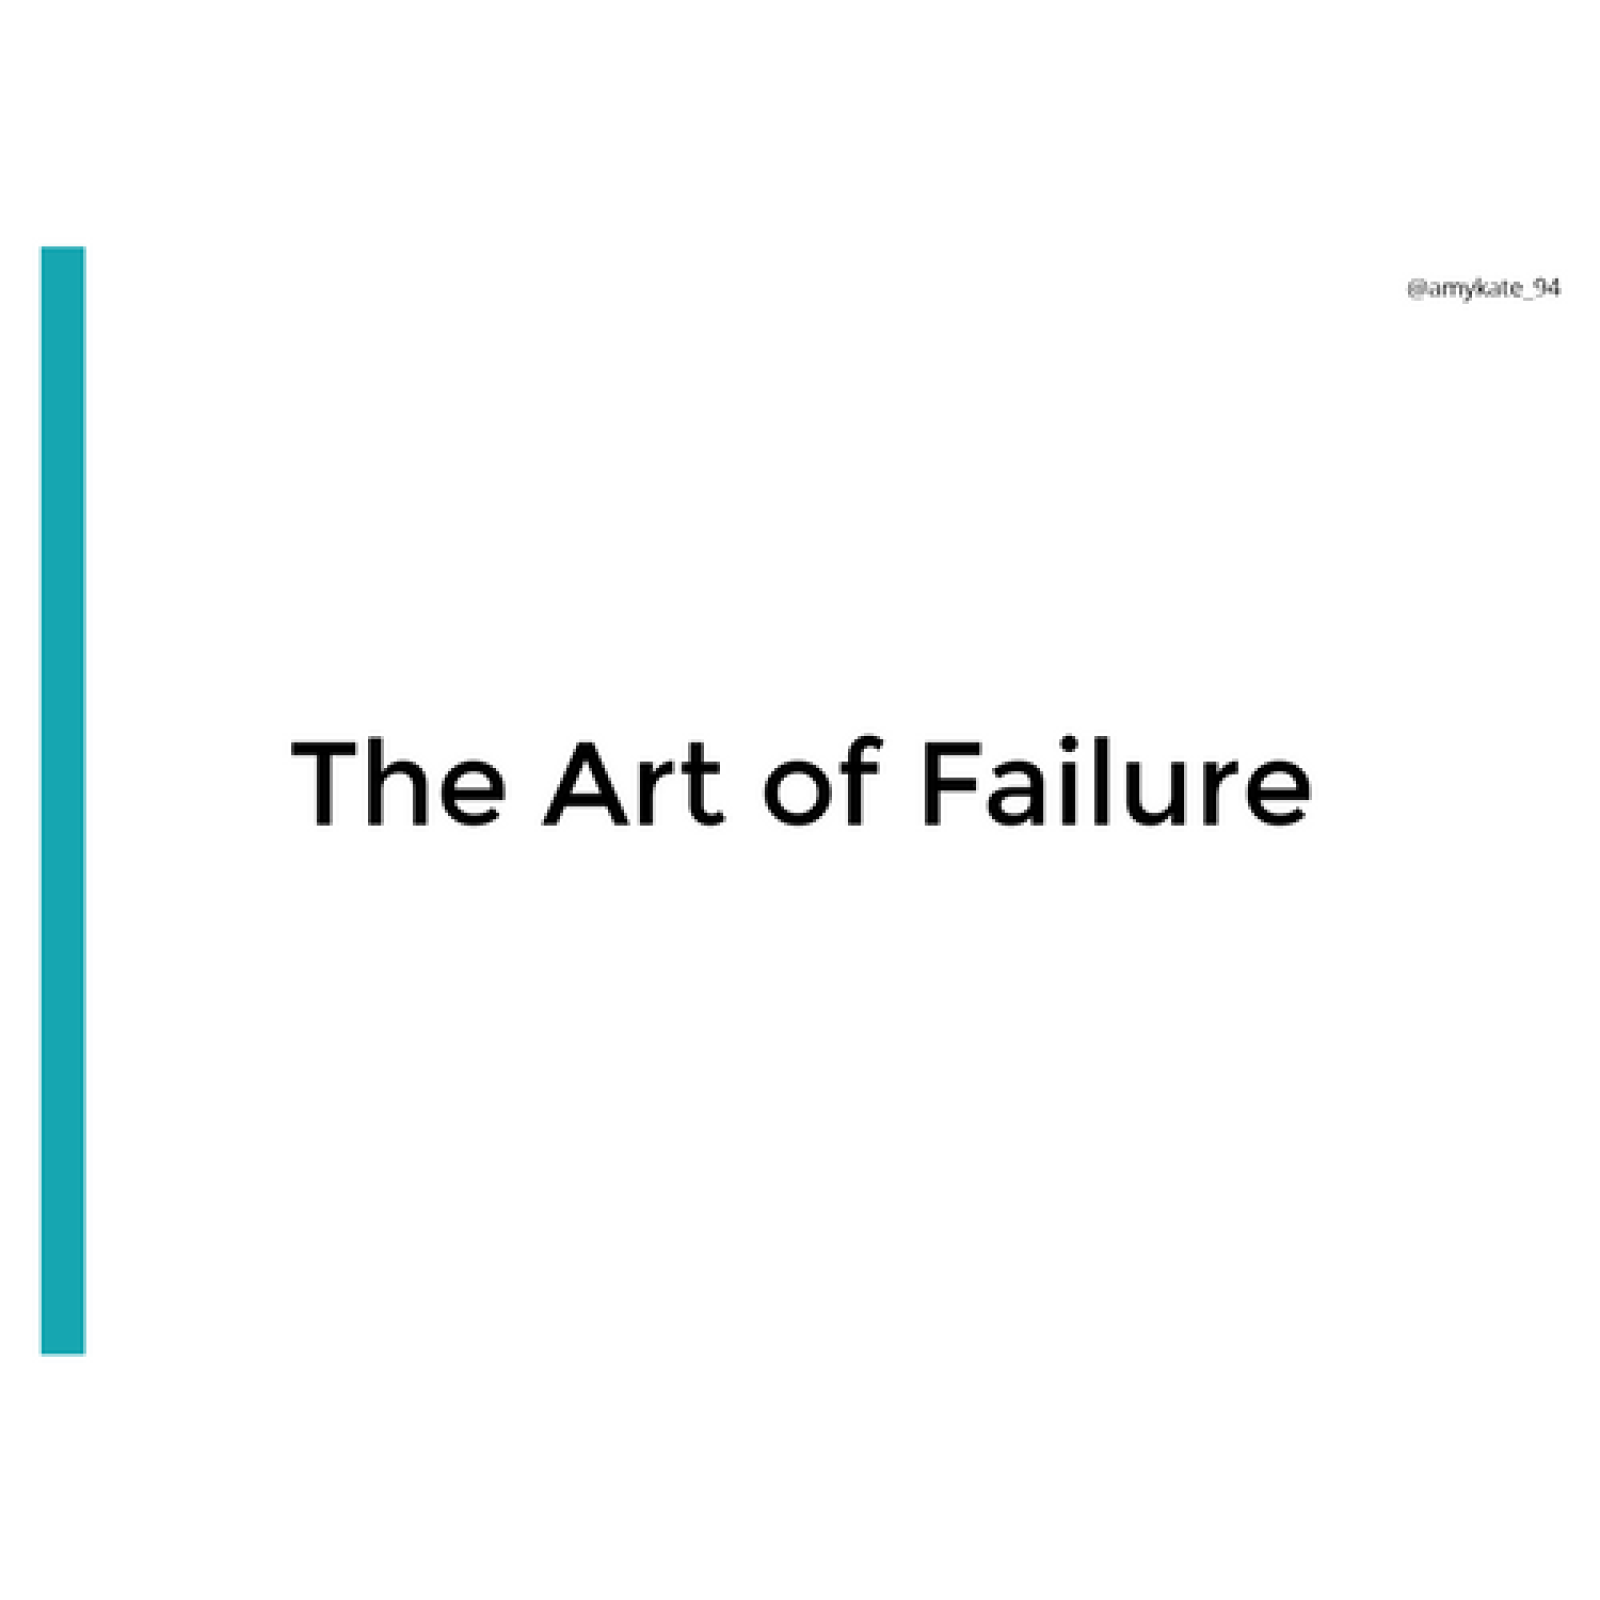 The Art of Failure